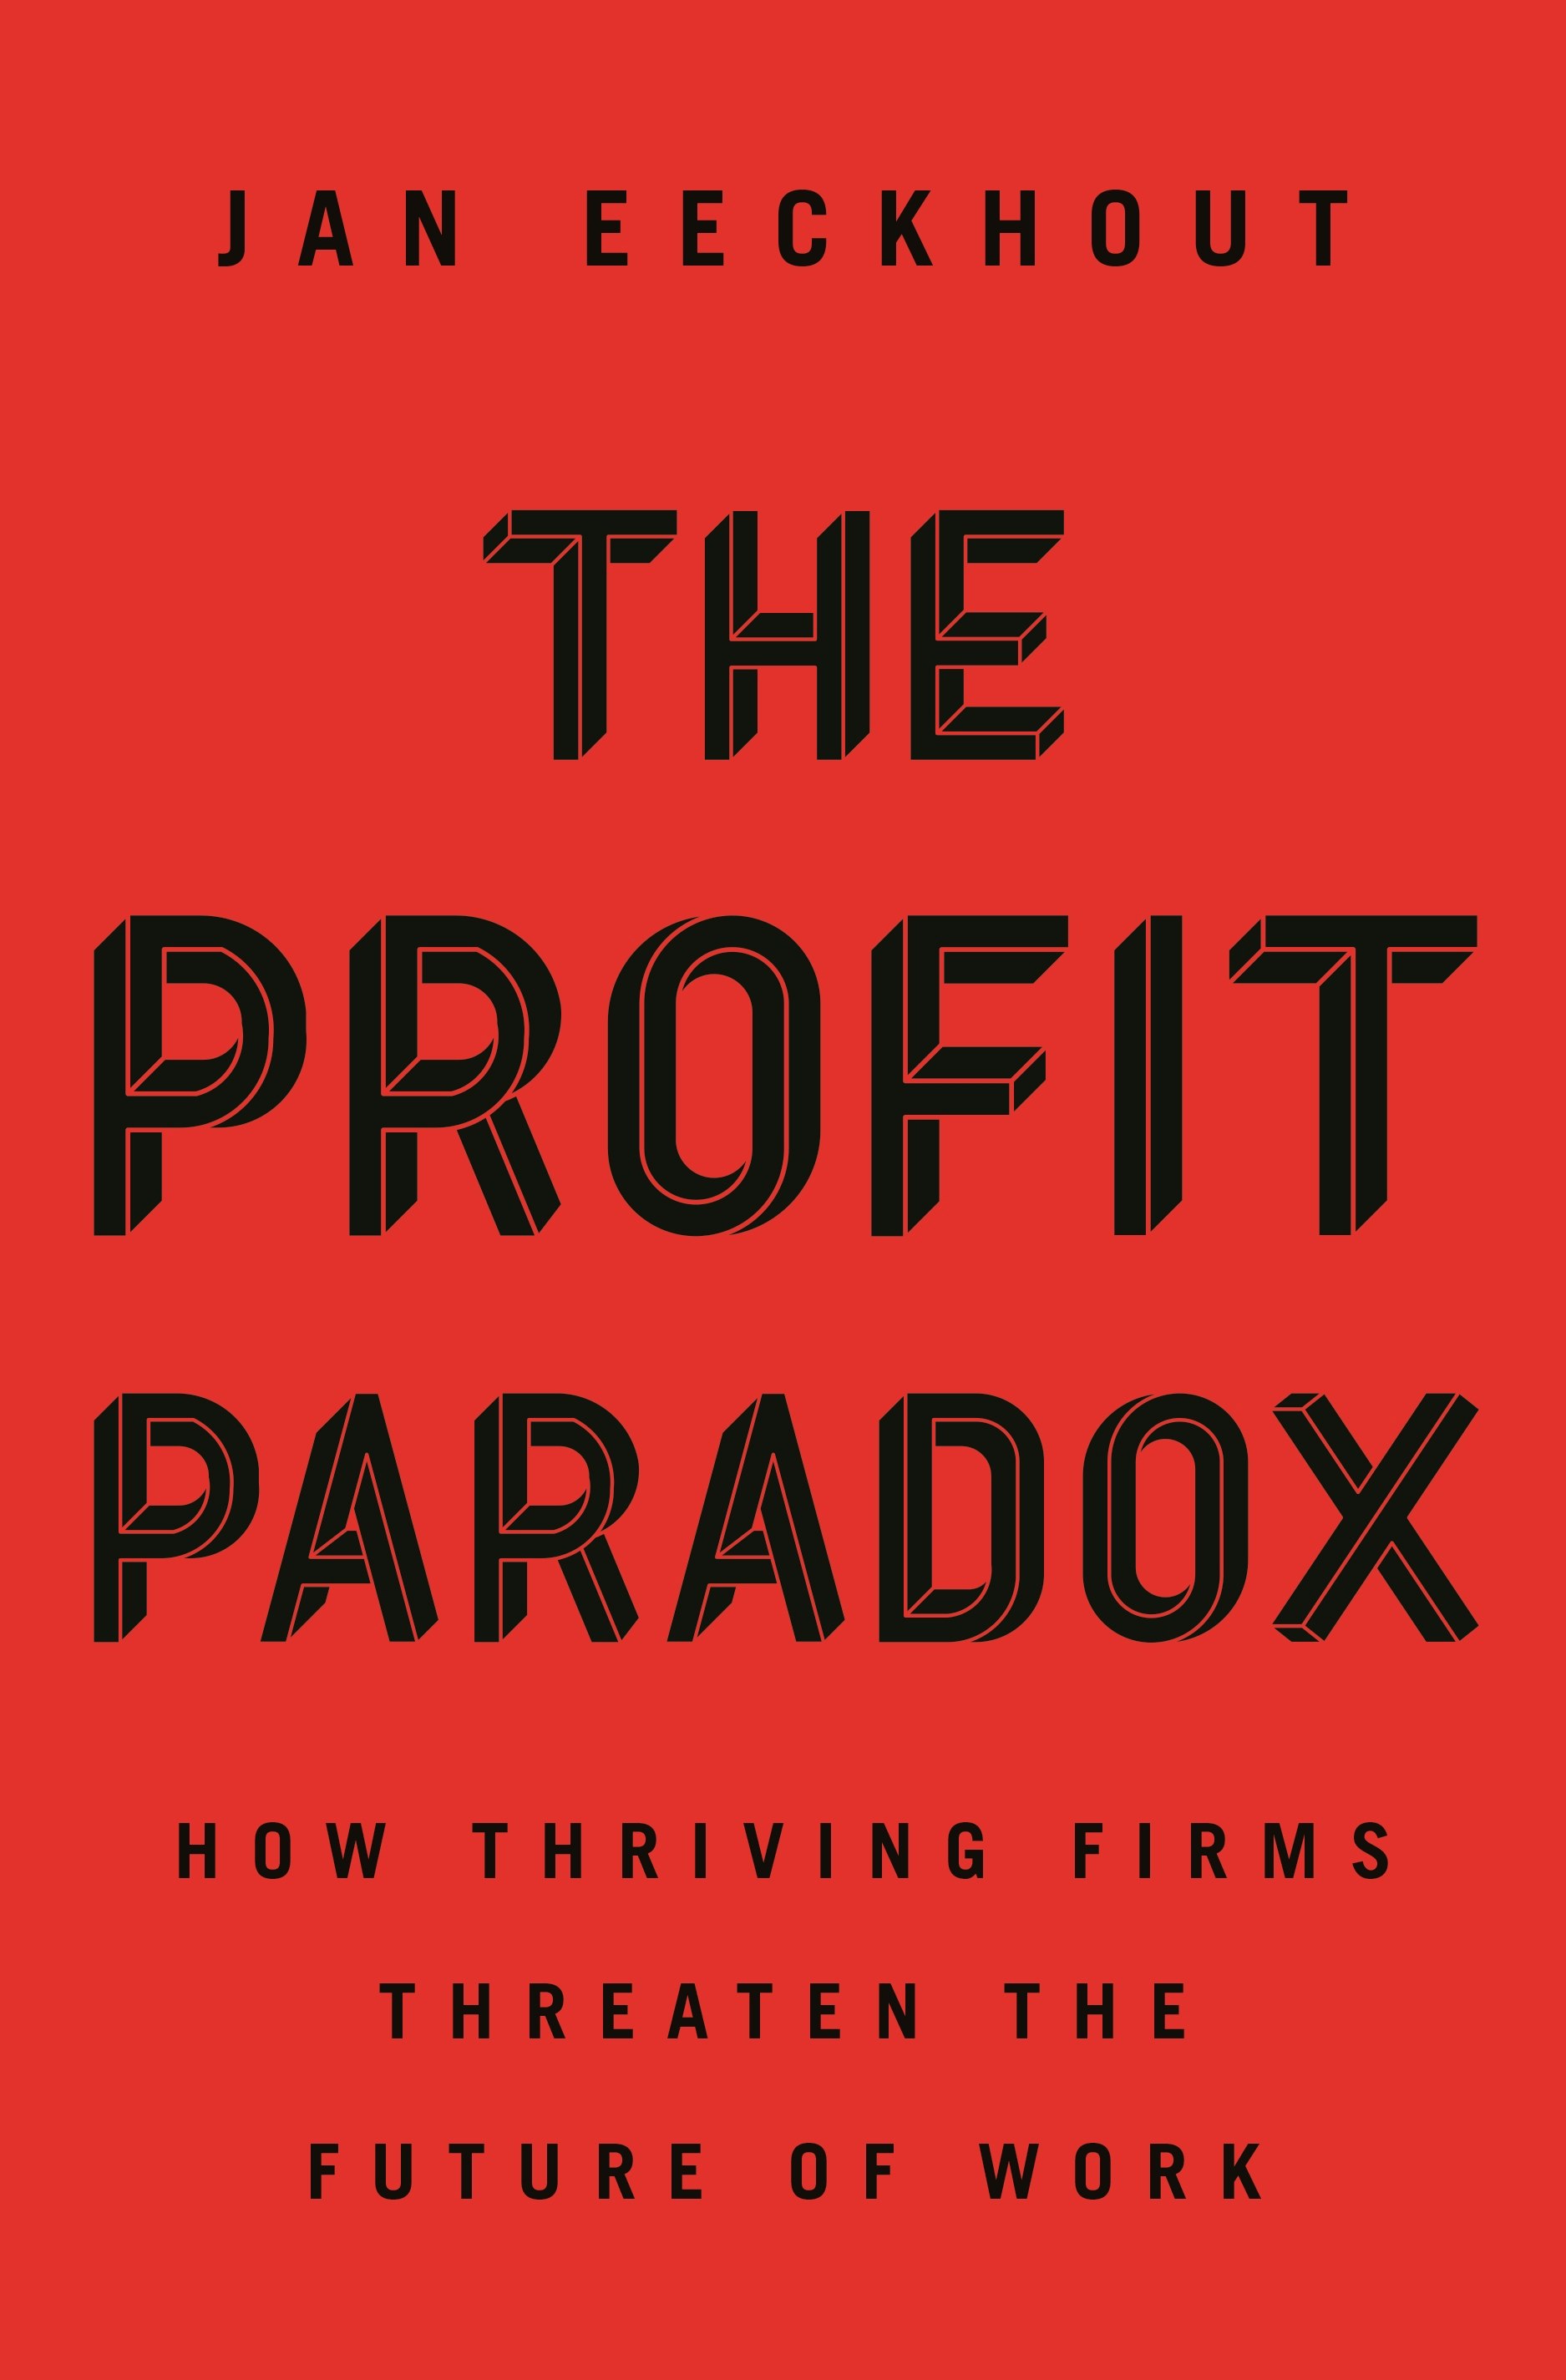 University　Princeton　Paradox　Profit　The　Press